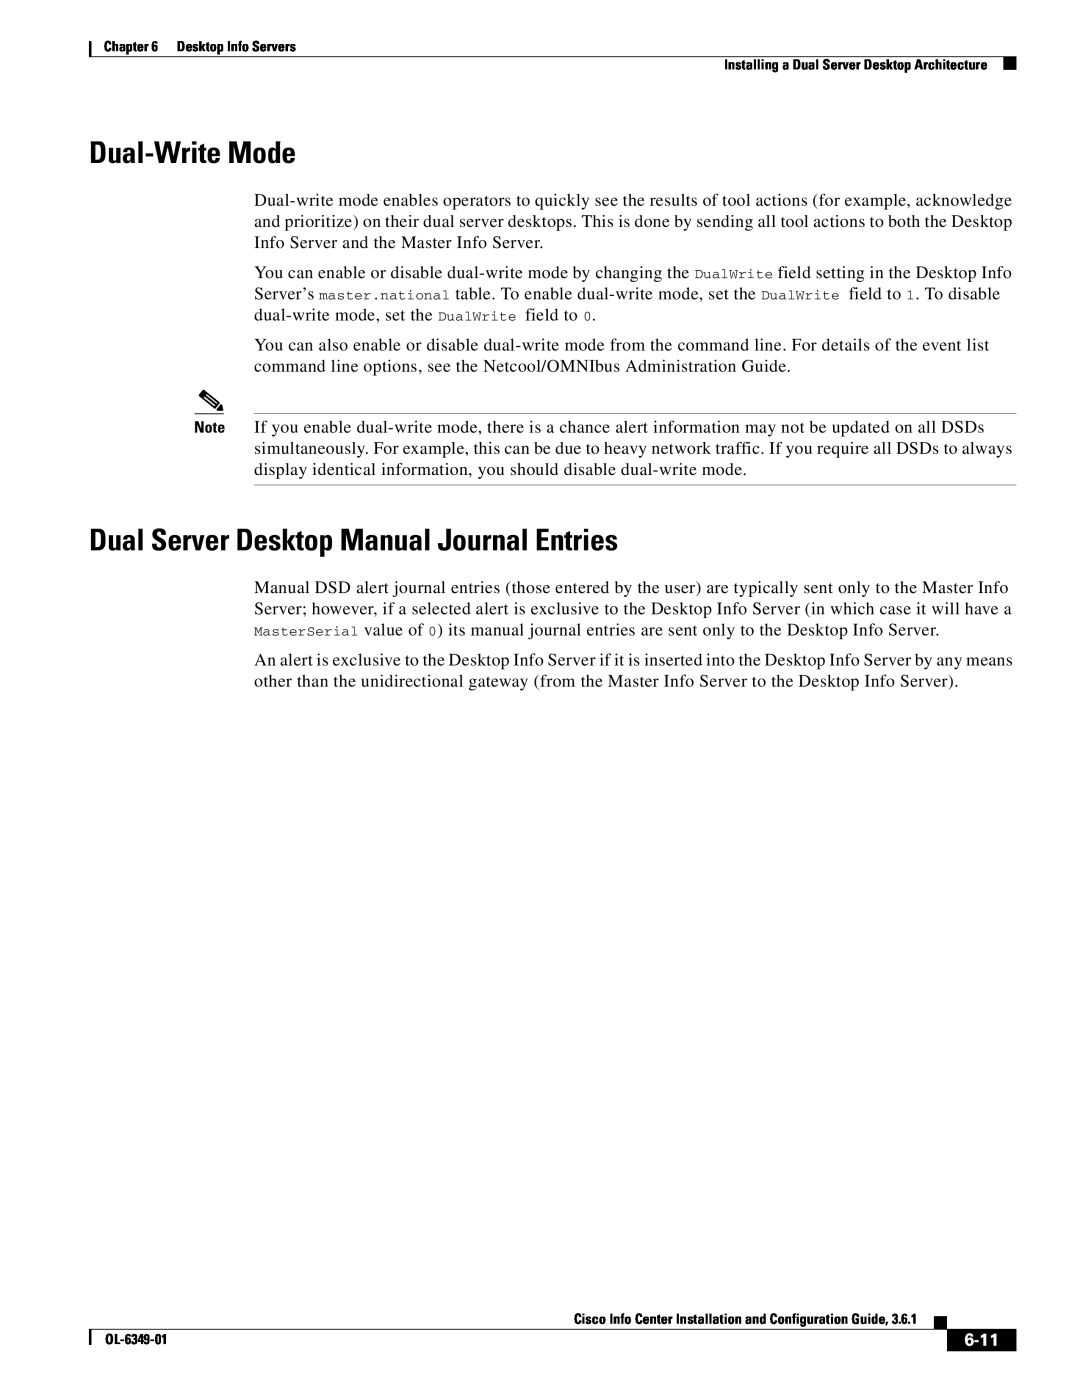 Cisco Systems OL-6349-01 manual Dual-Write Mode, Dual Server Desktop Manual Journal Entries, 6-11 